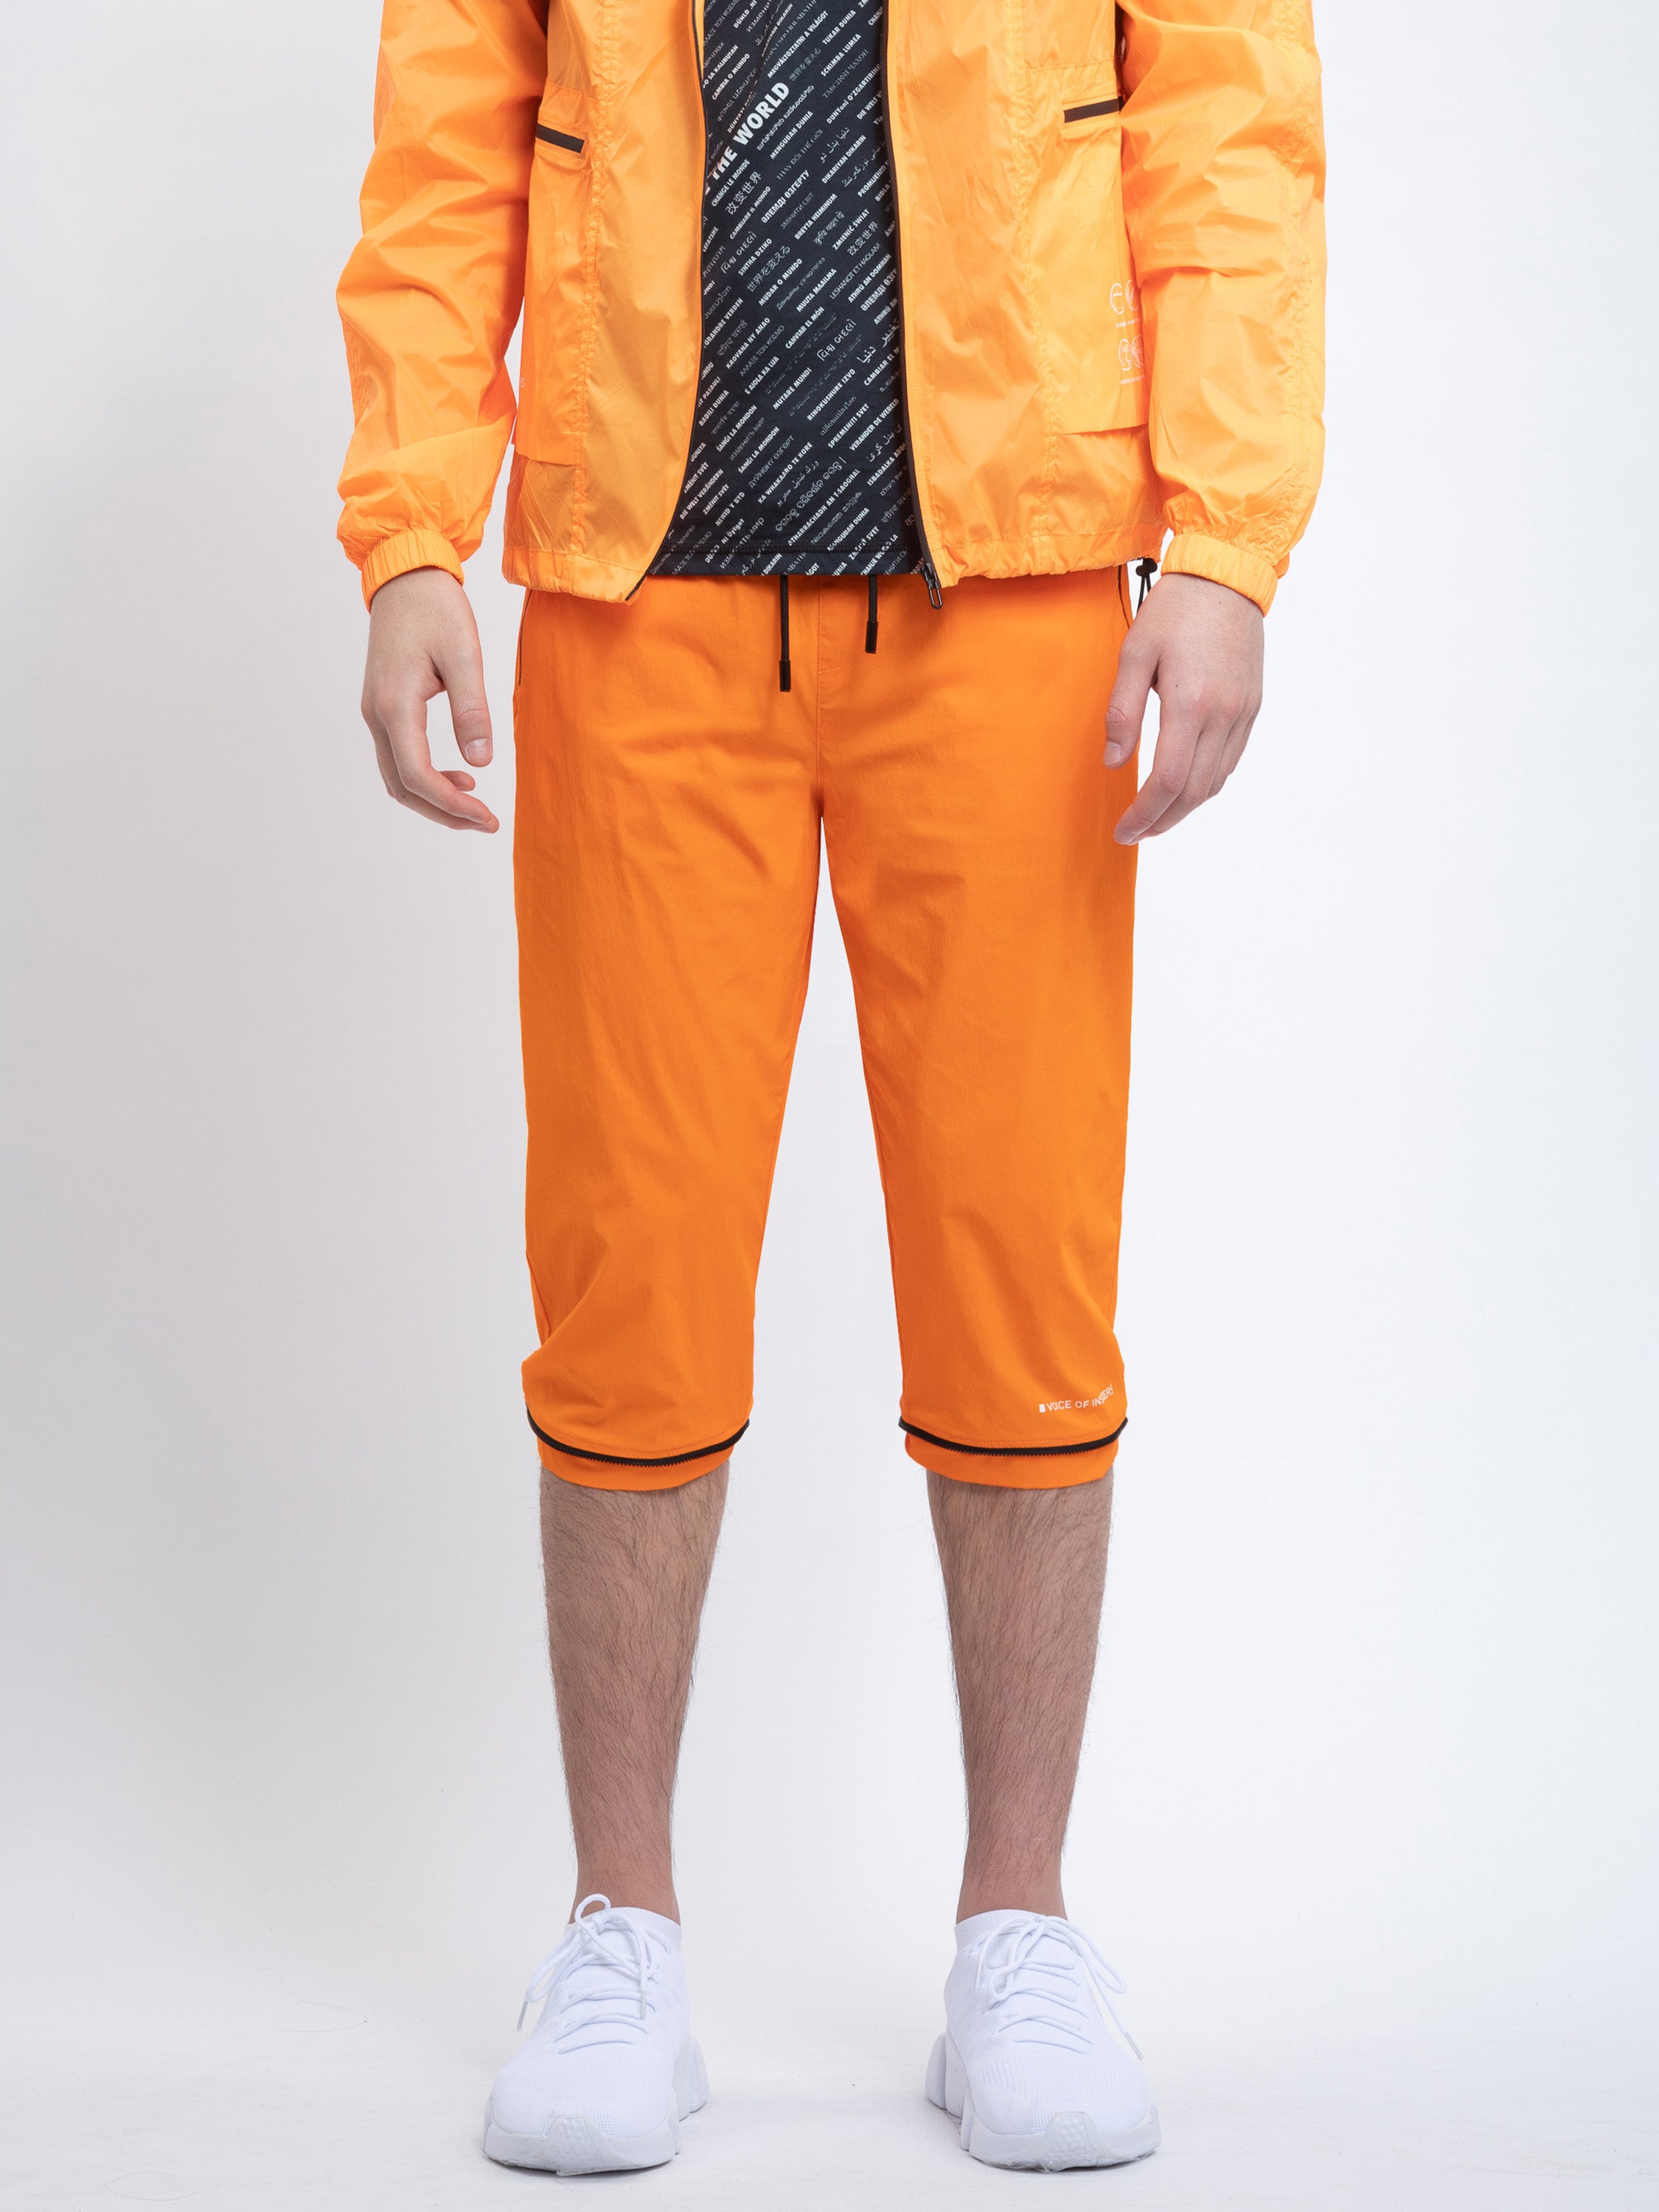 Transformable Pants in Tiger Orange